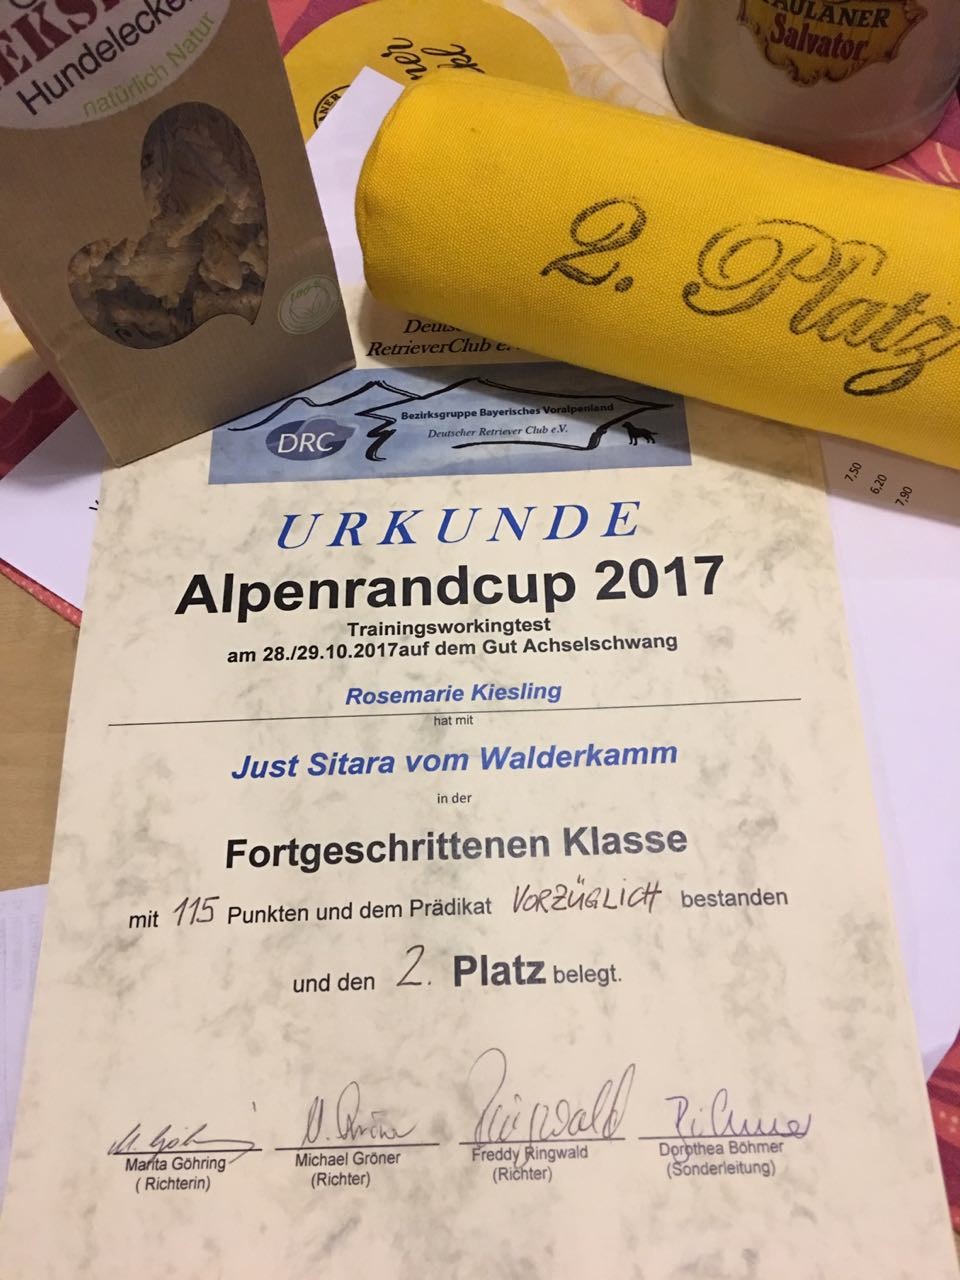 Alpenrand cup 2017